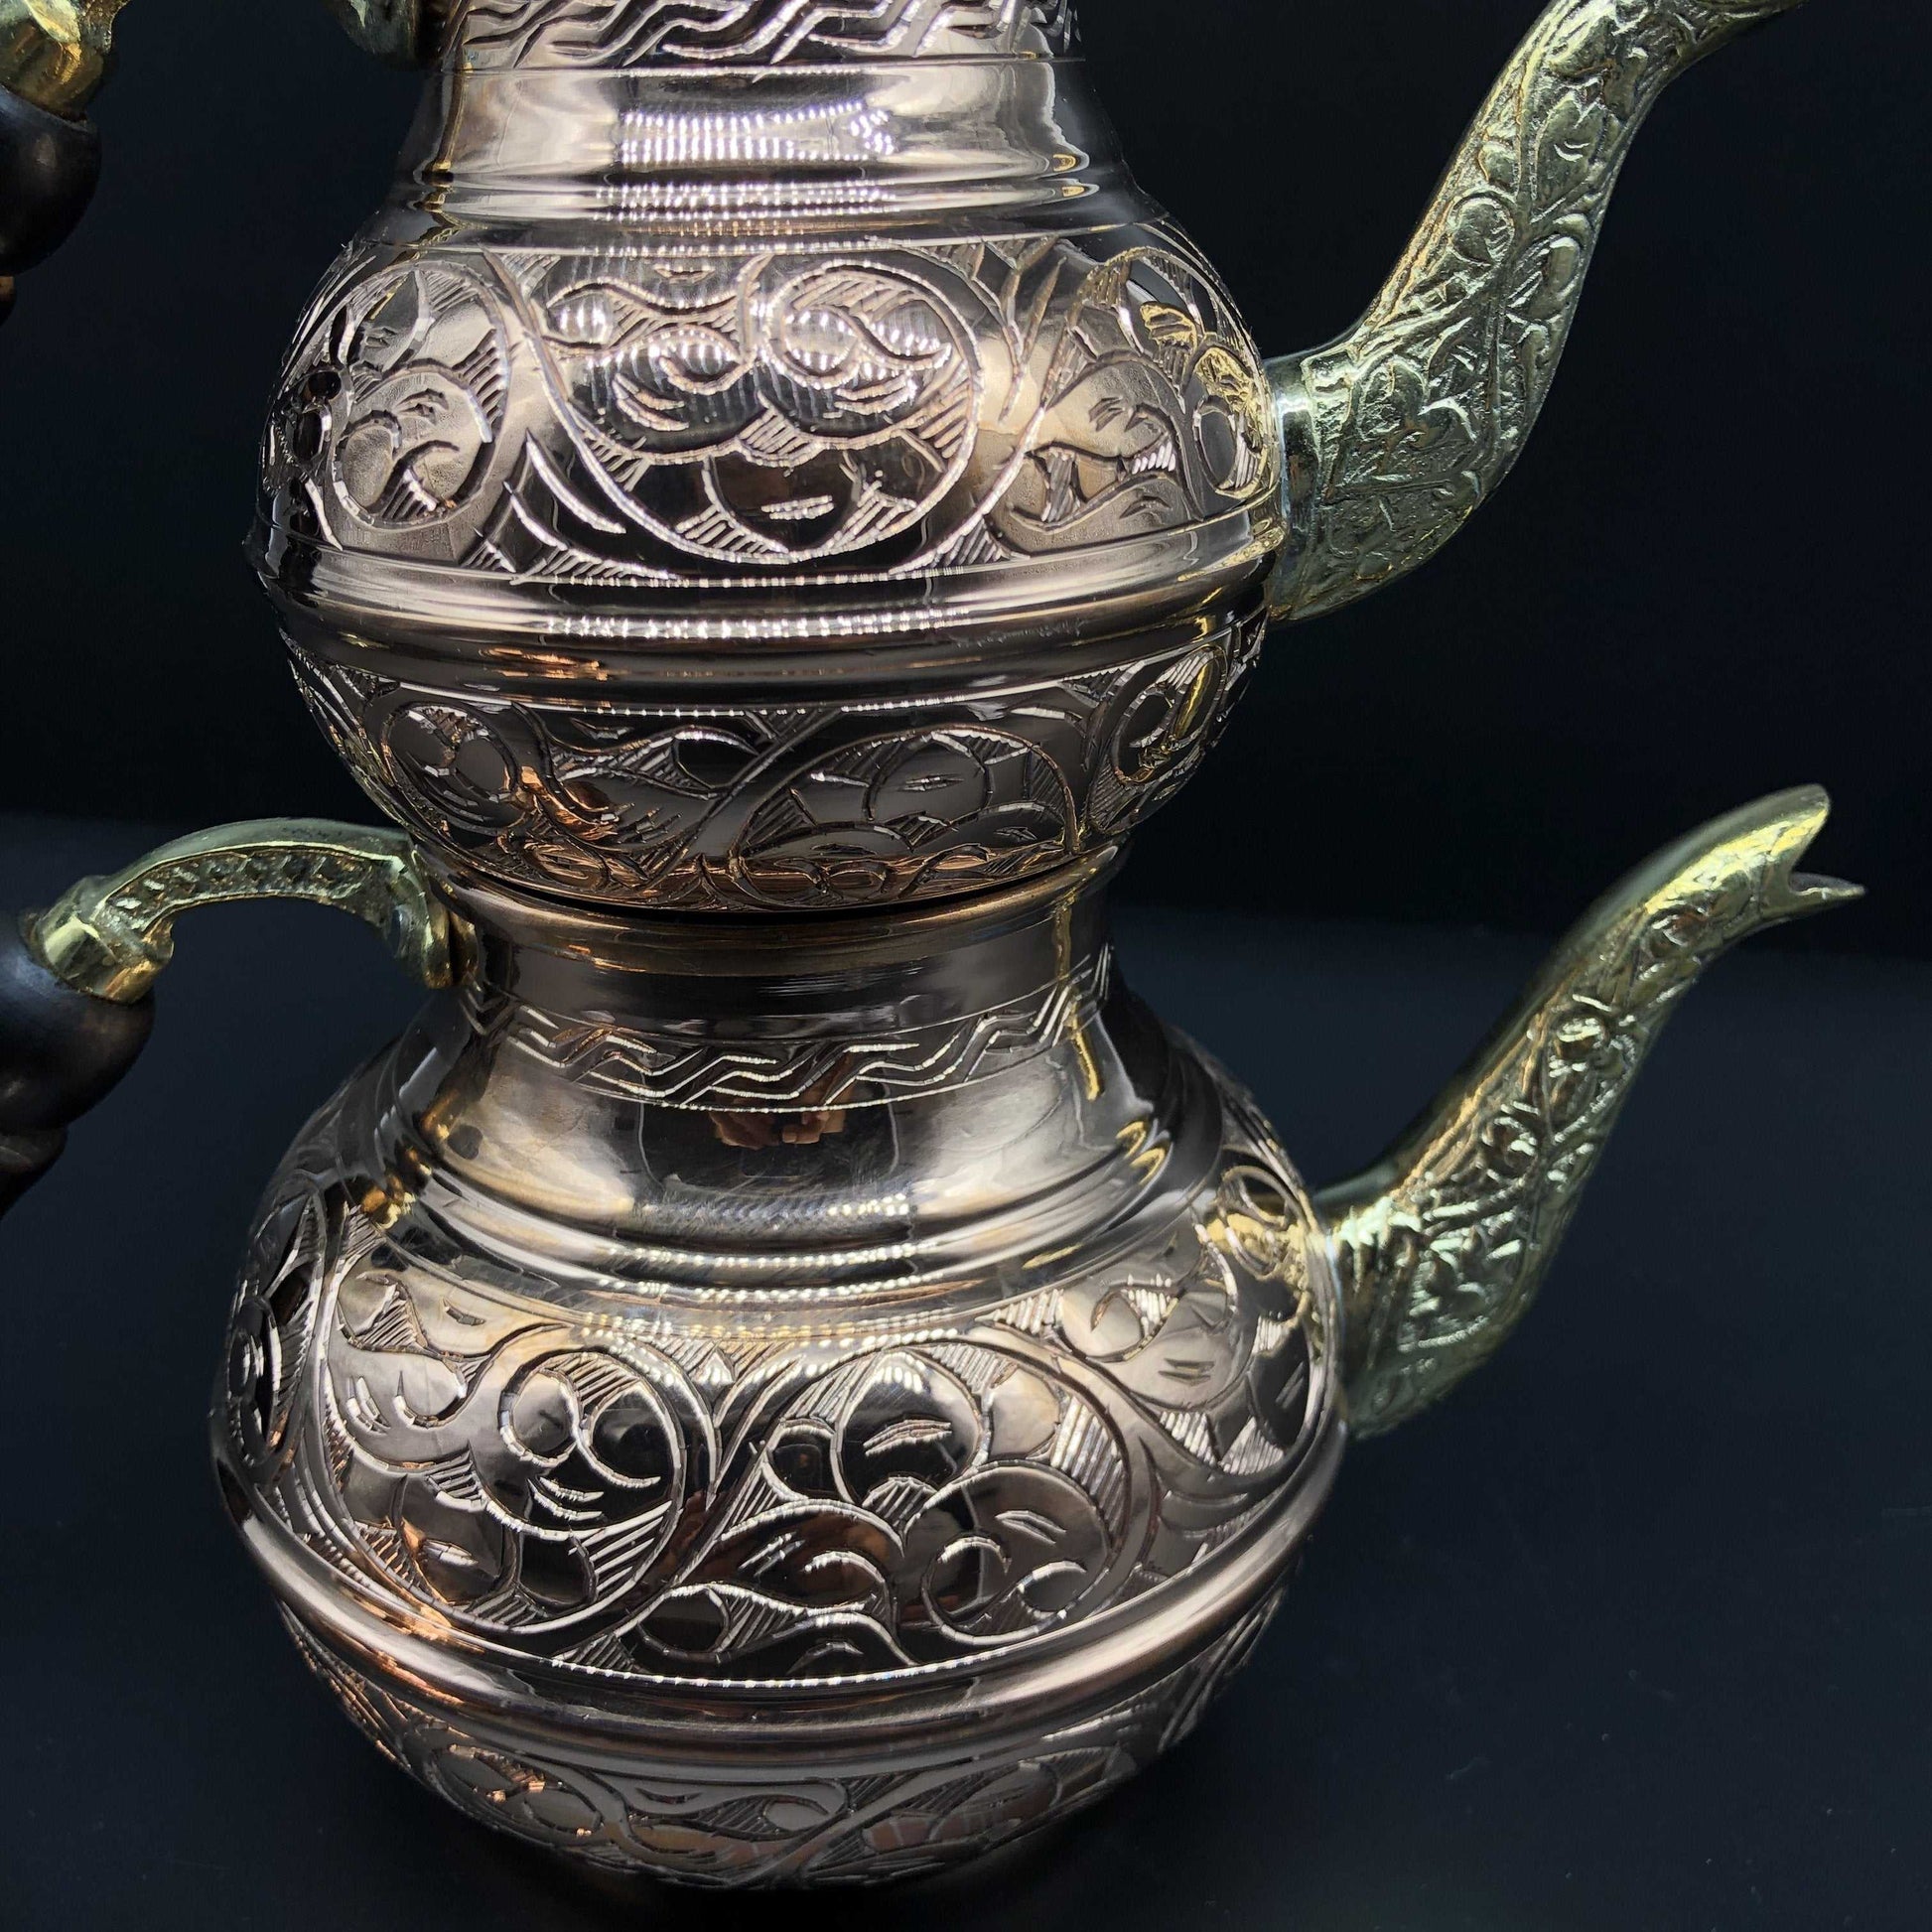 Handmade Original Copper Turkish Tea Pot Kettle